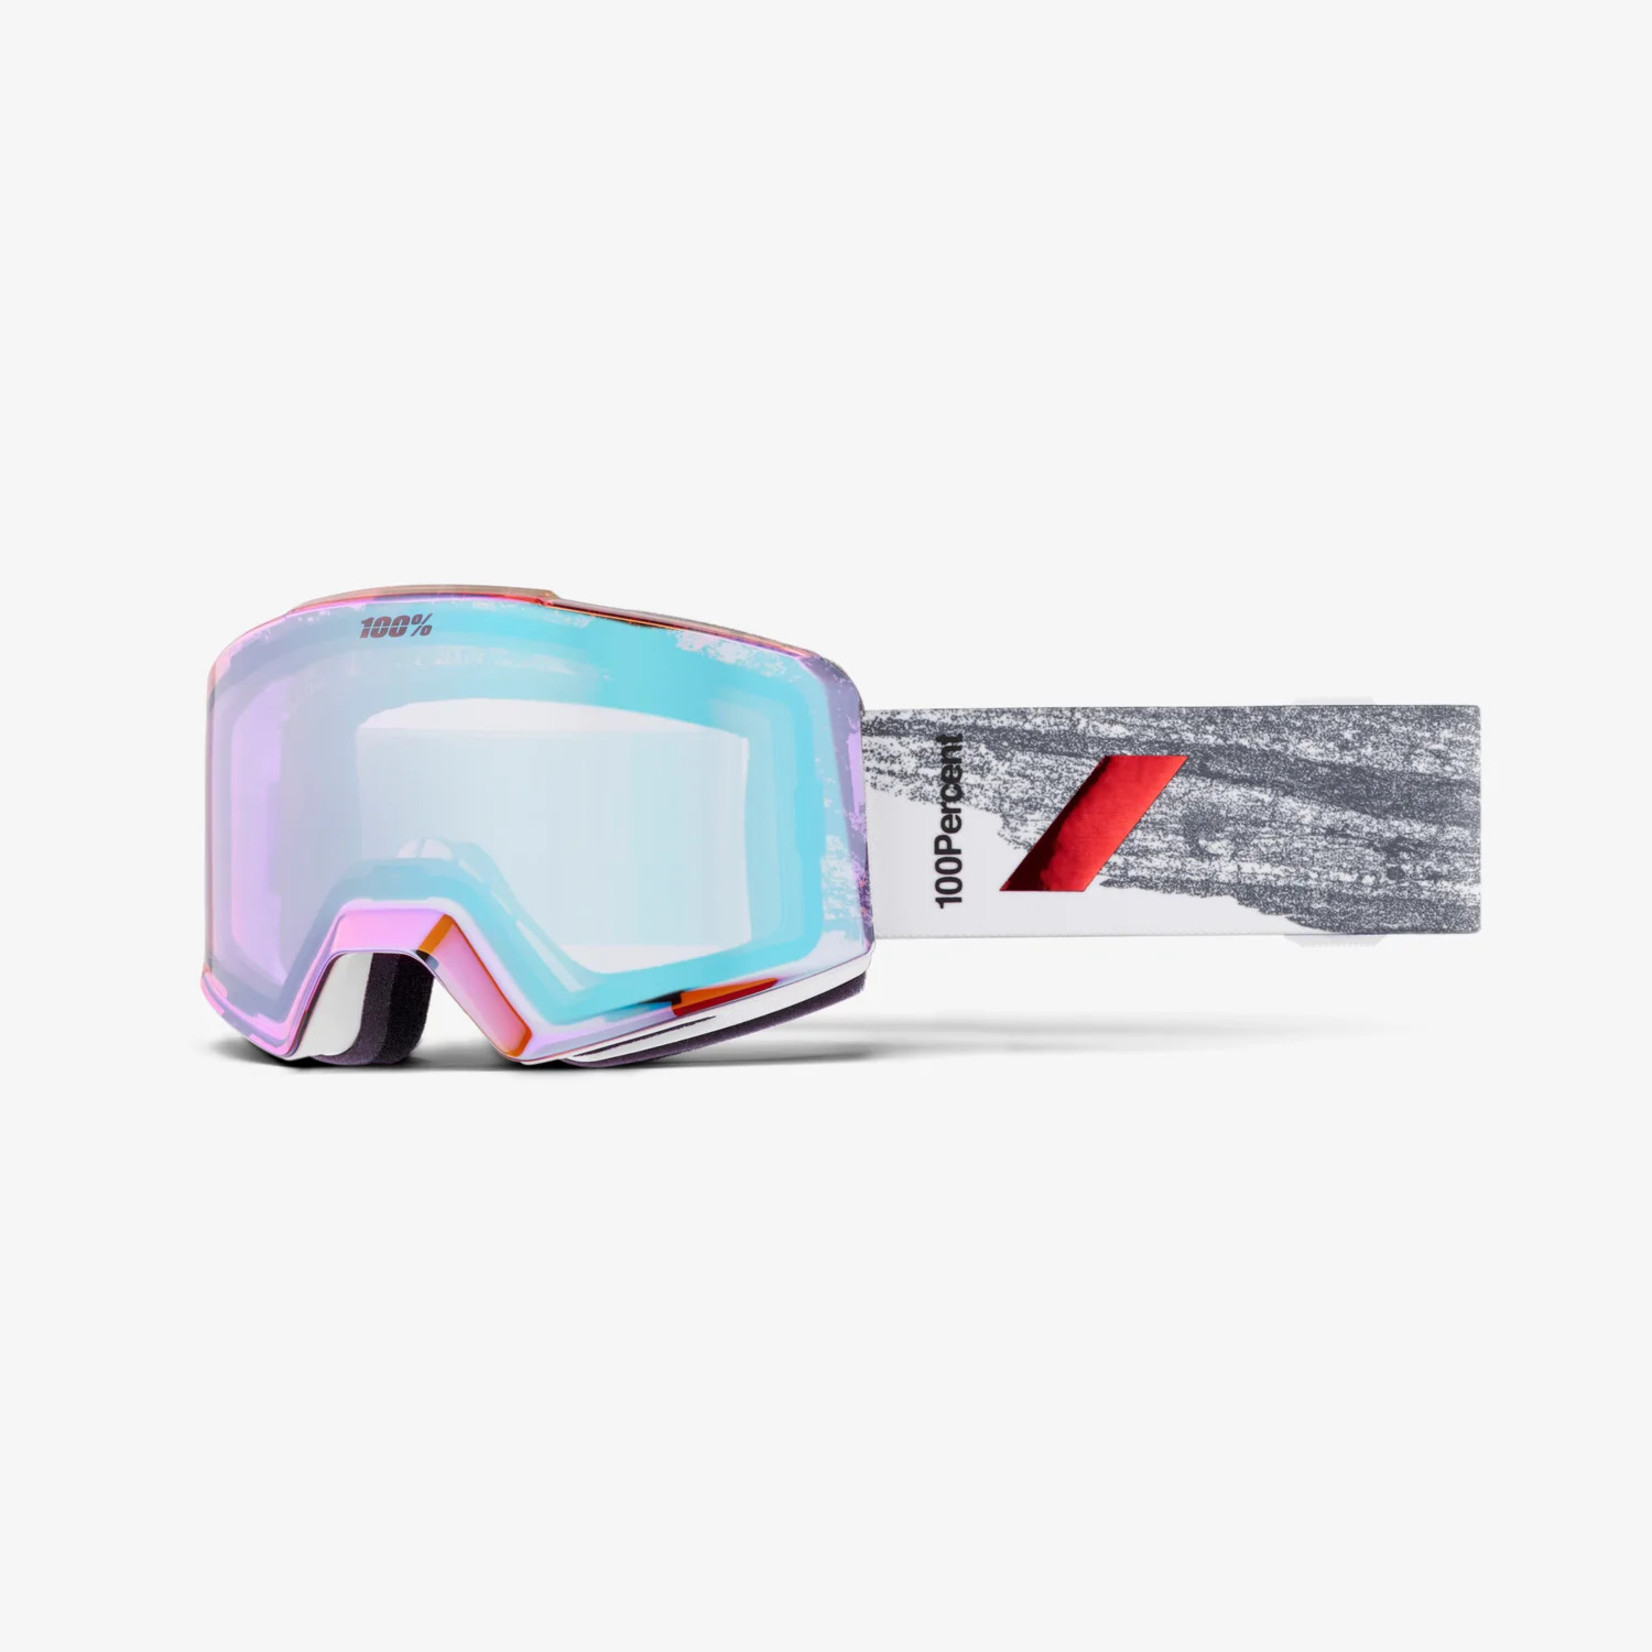 100% 100% The norg lunette de ski unisexe